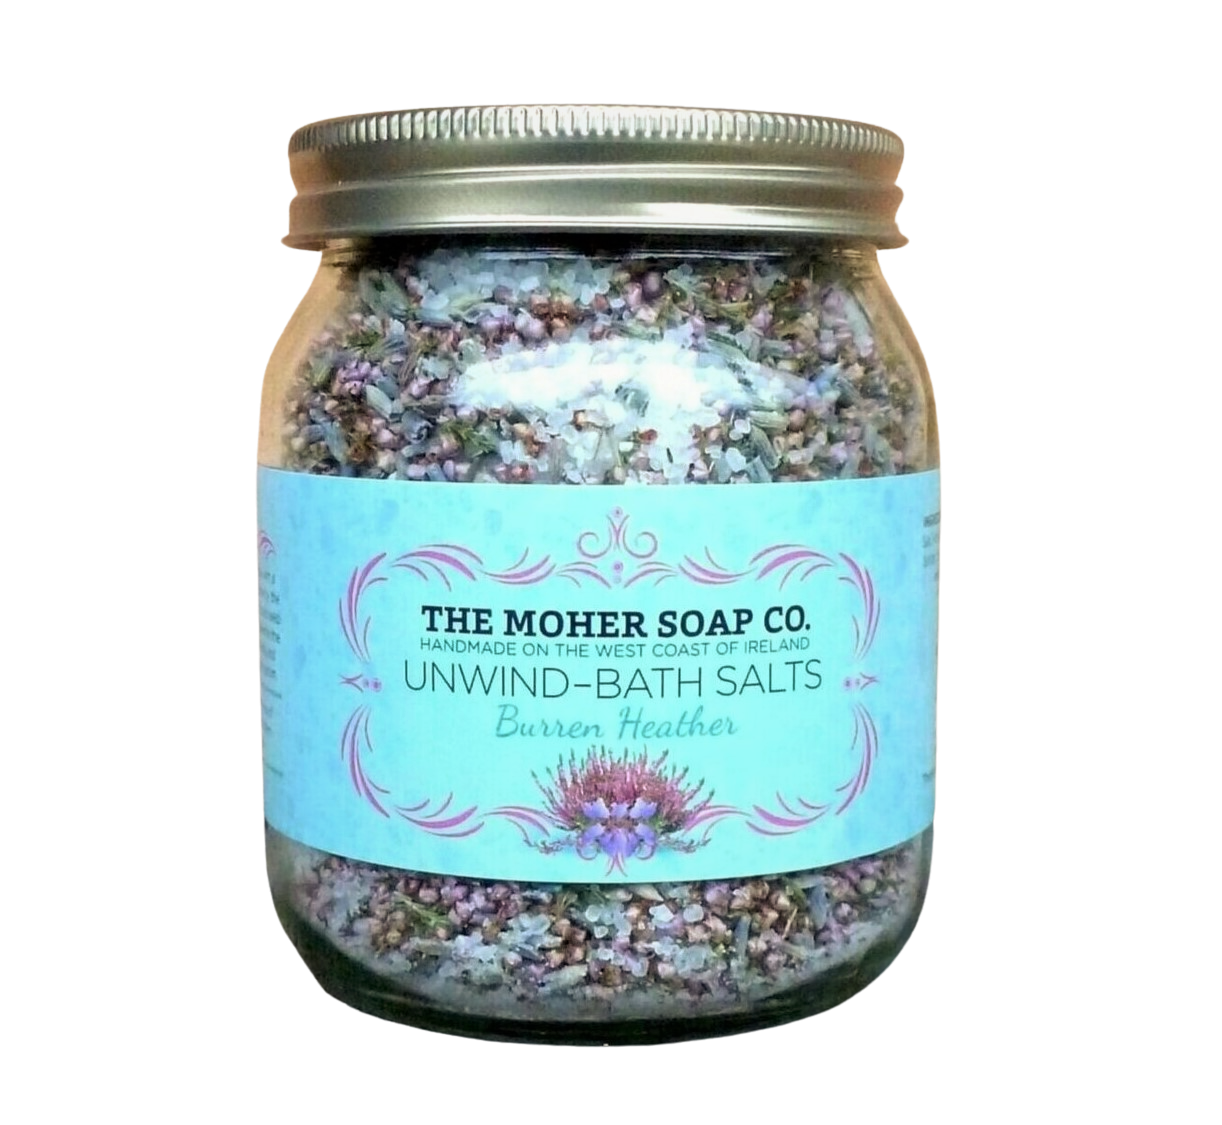 The Moher Soap Co. Unwind Bath Salts - Burren Heather